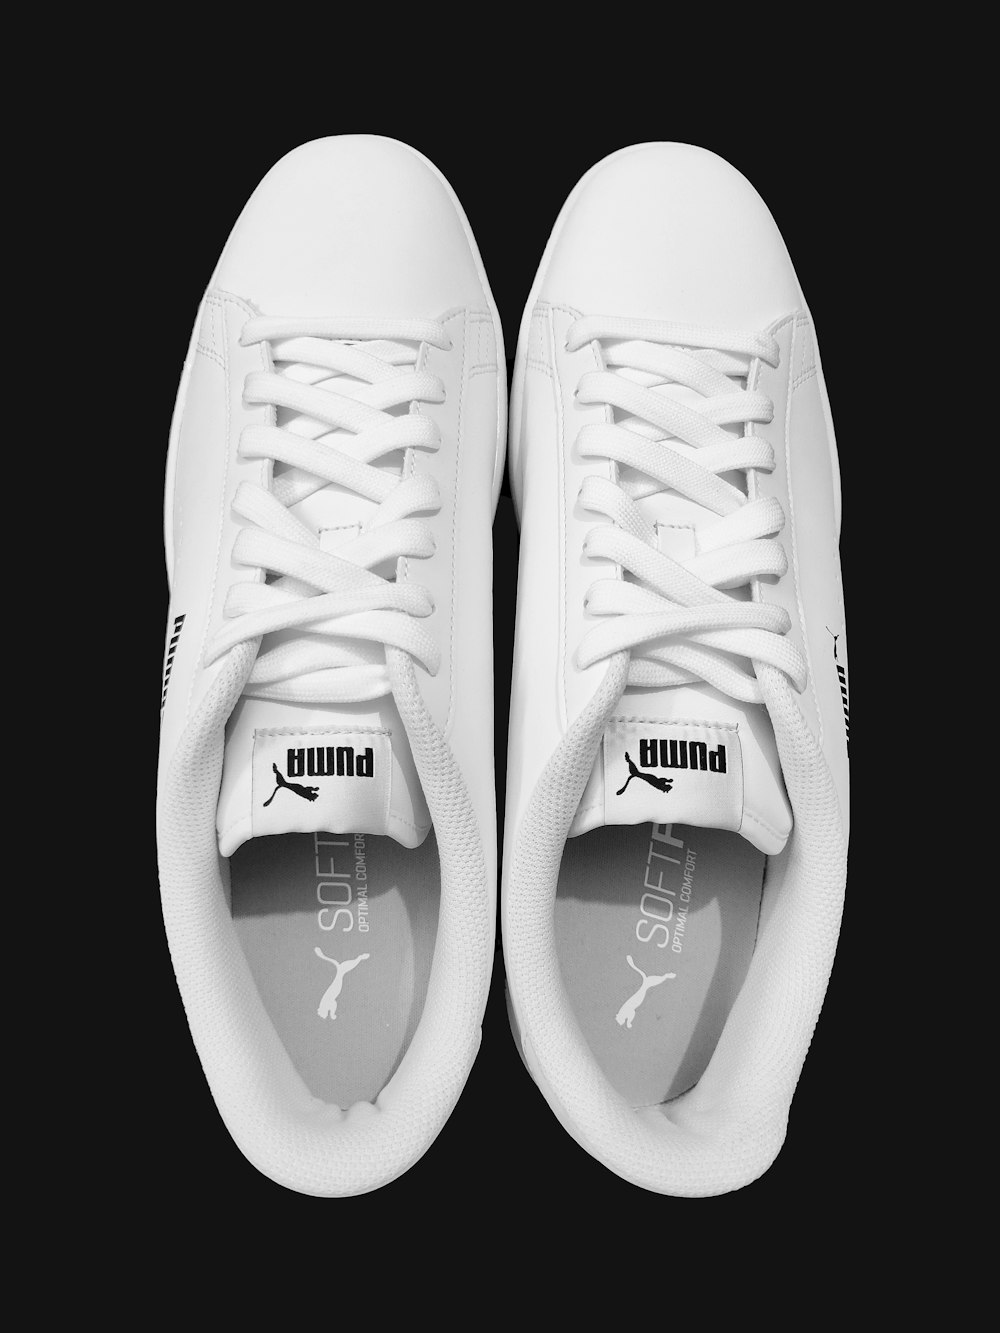 Foto adidas boost 350 blancas – Gris gratis en Unsplash